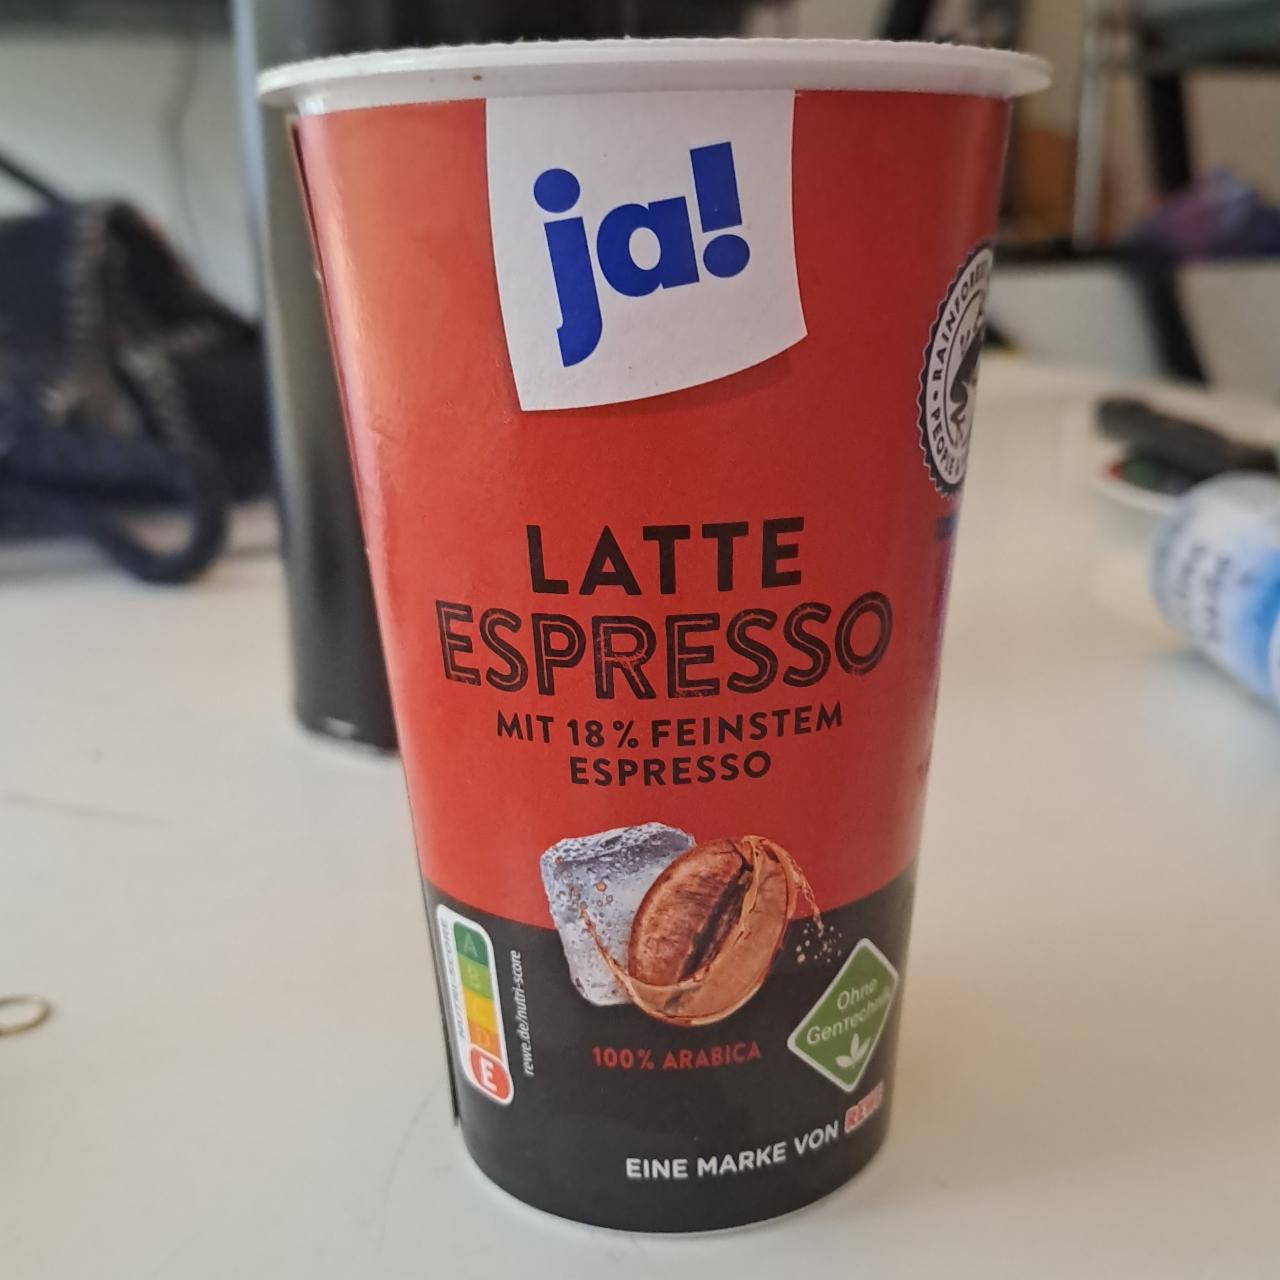 Fotografie - Latte espresso Ja!